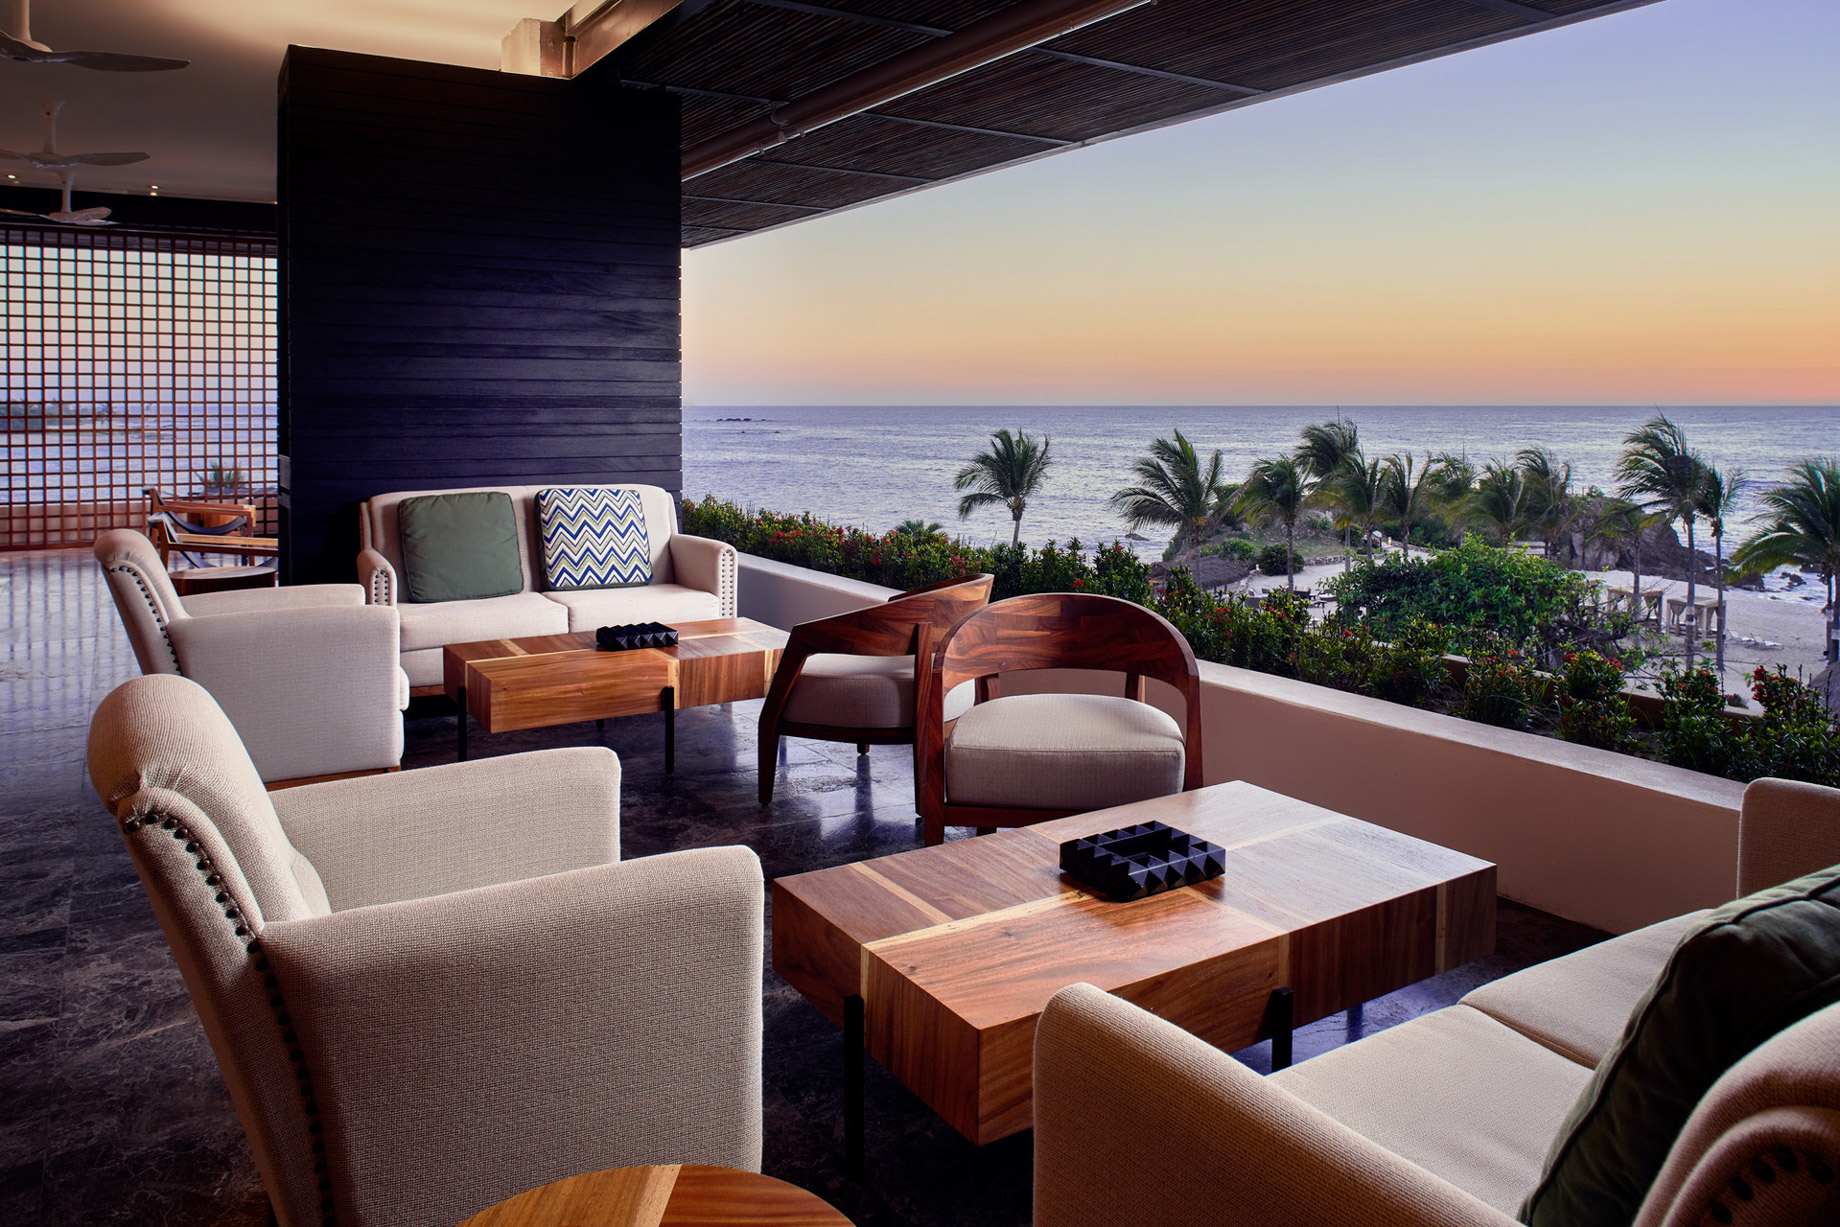 Four Seasons Resort Punta Mita – Nayarit, Mexico – Oceanview Restaurant Sunset Dining